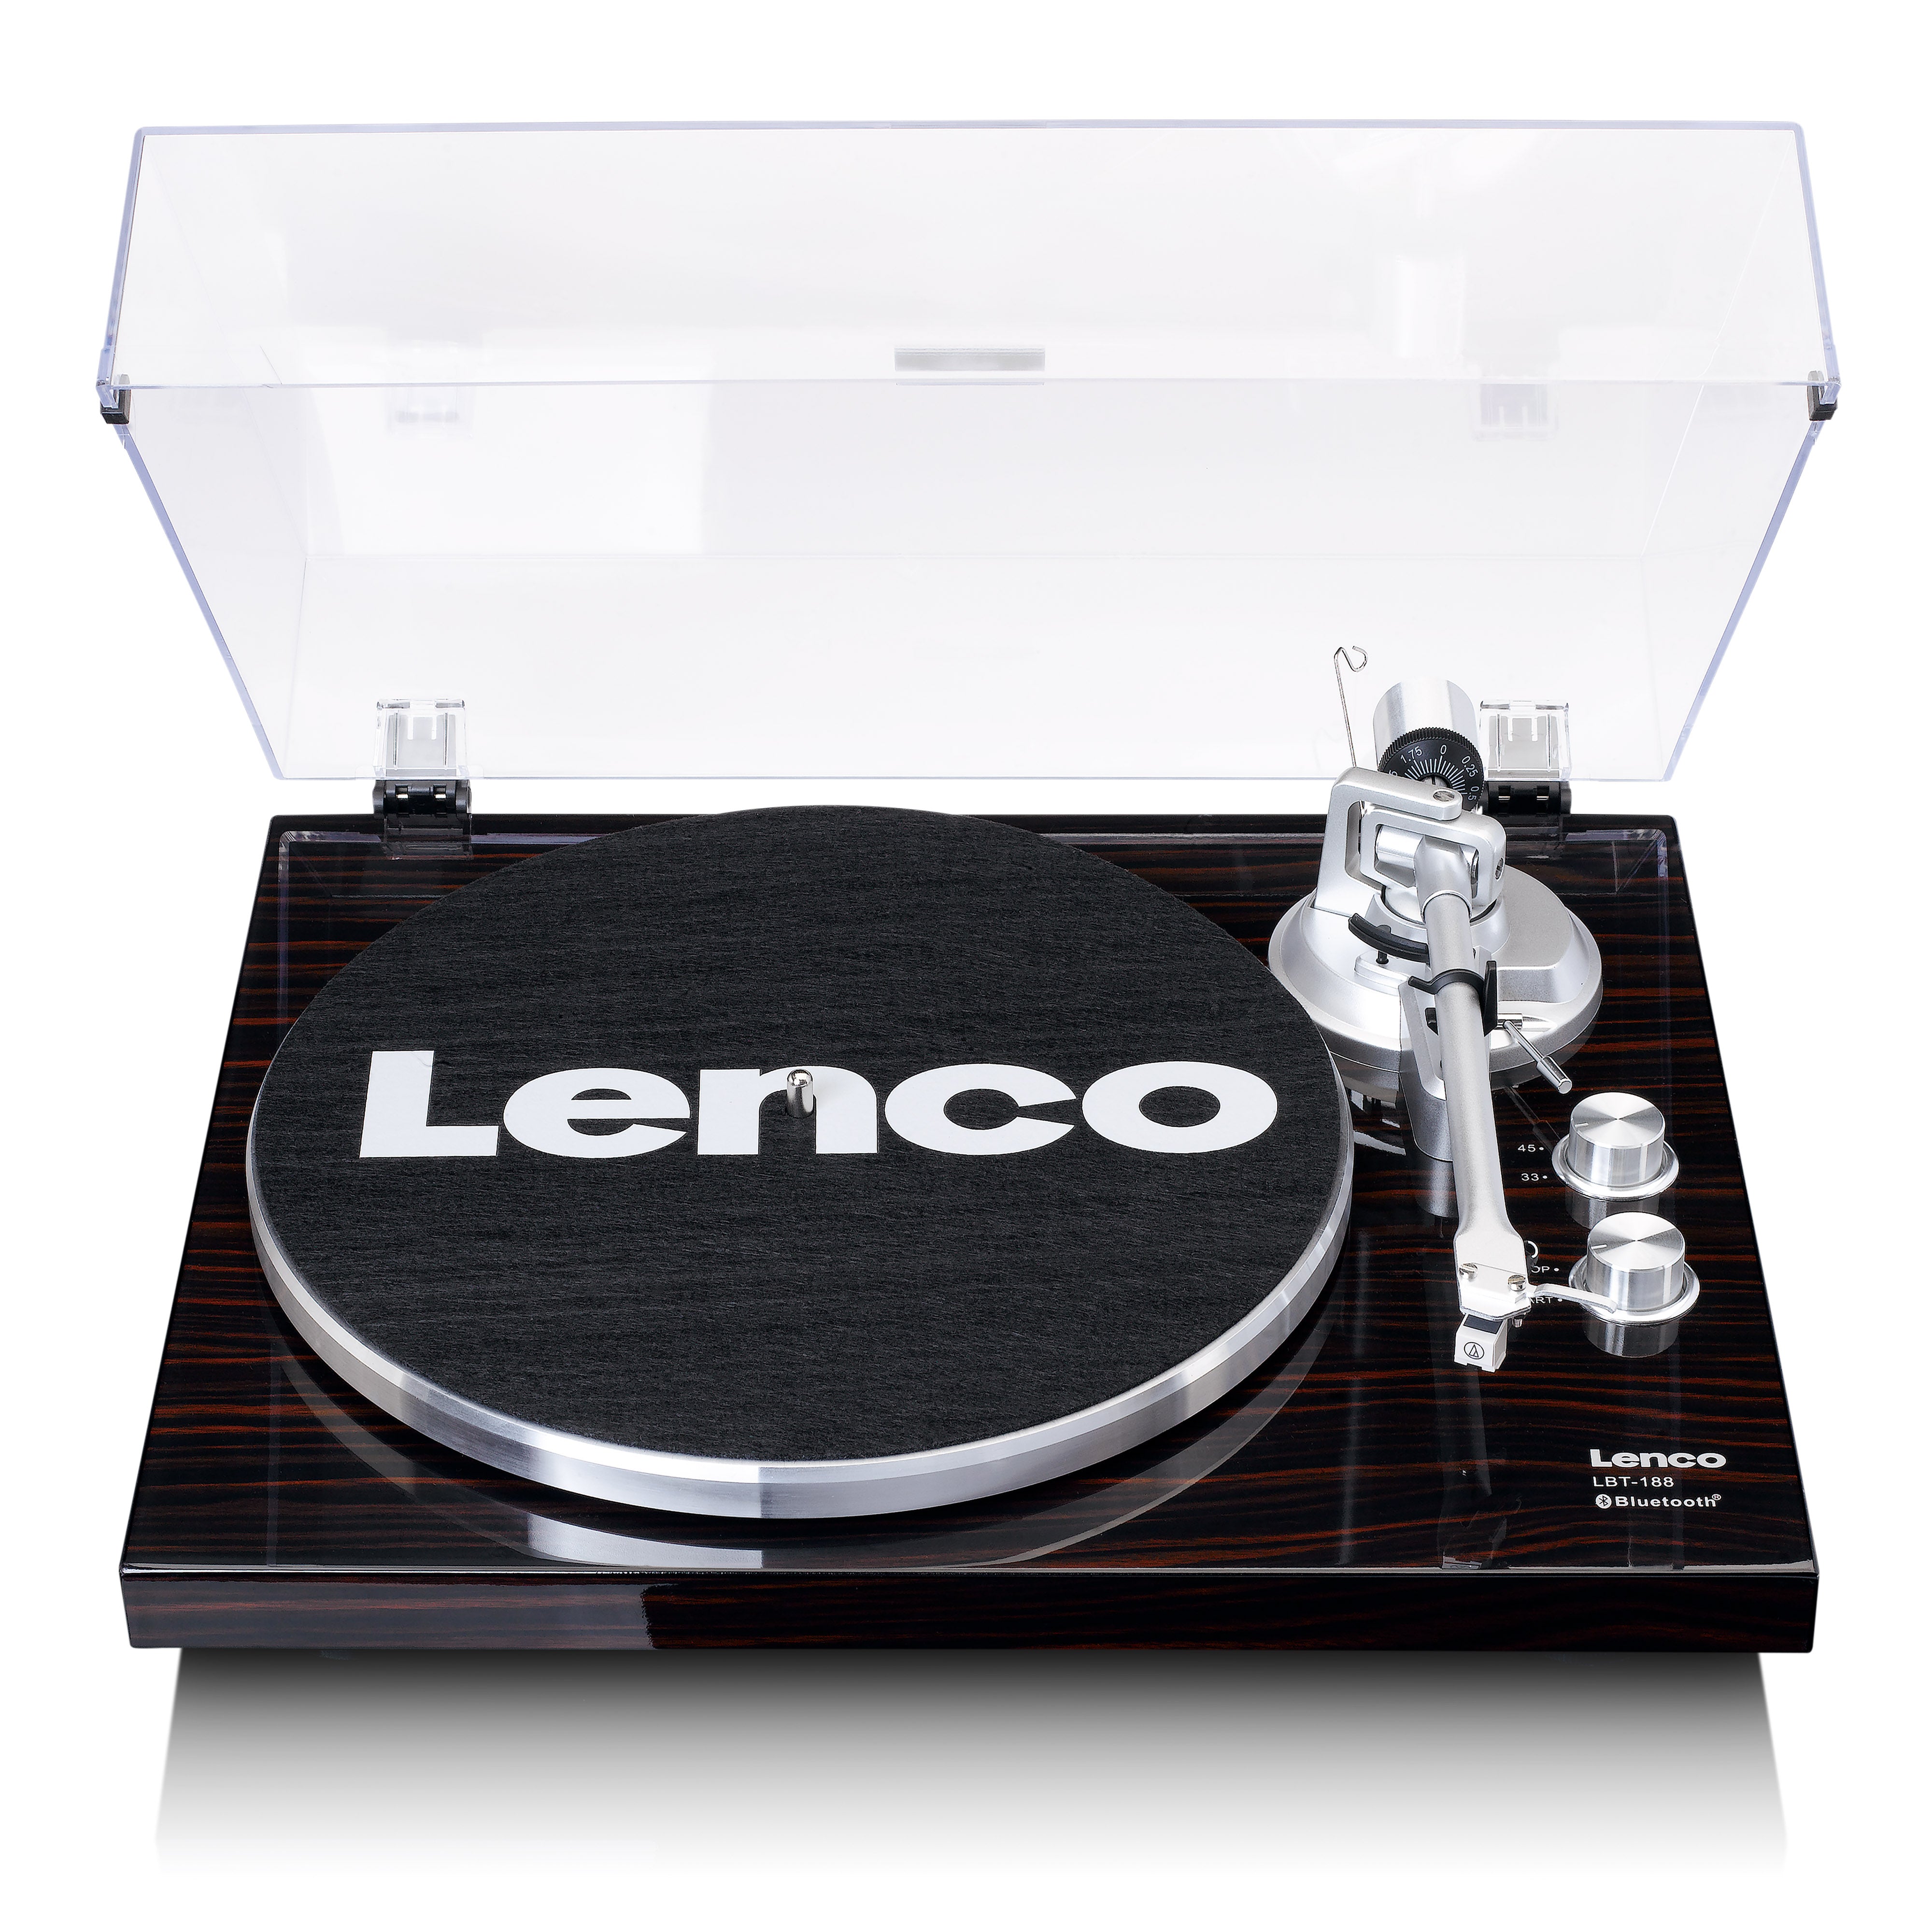 offiziellen Lenco Lenco.de Webshop Lenco | kaufen? – - Jetzt Offizieller Webshop im LBT-188WA